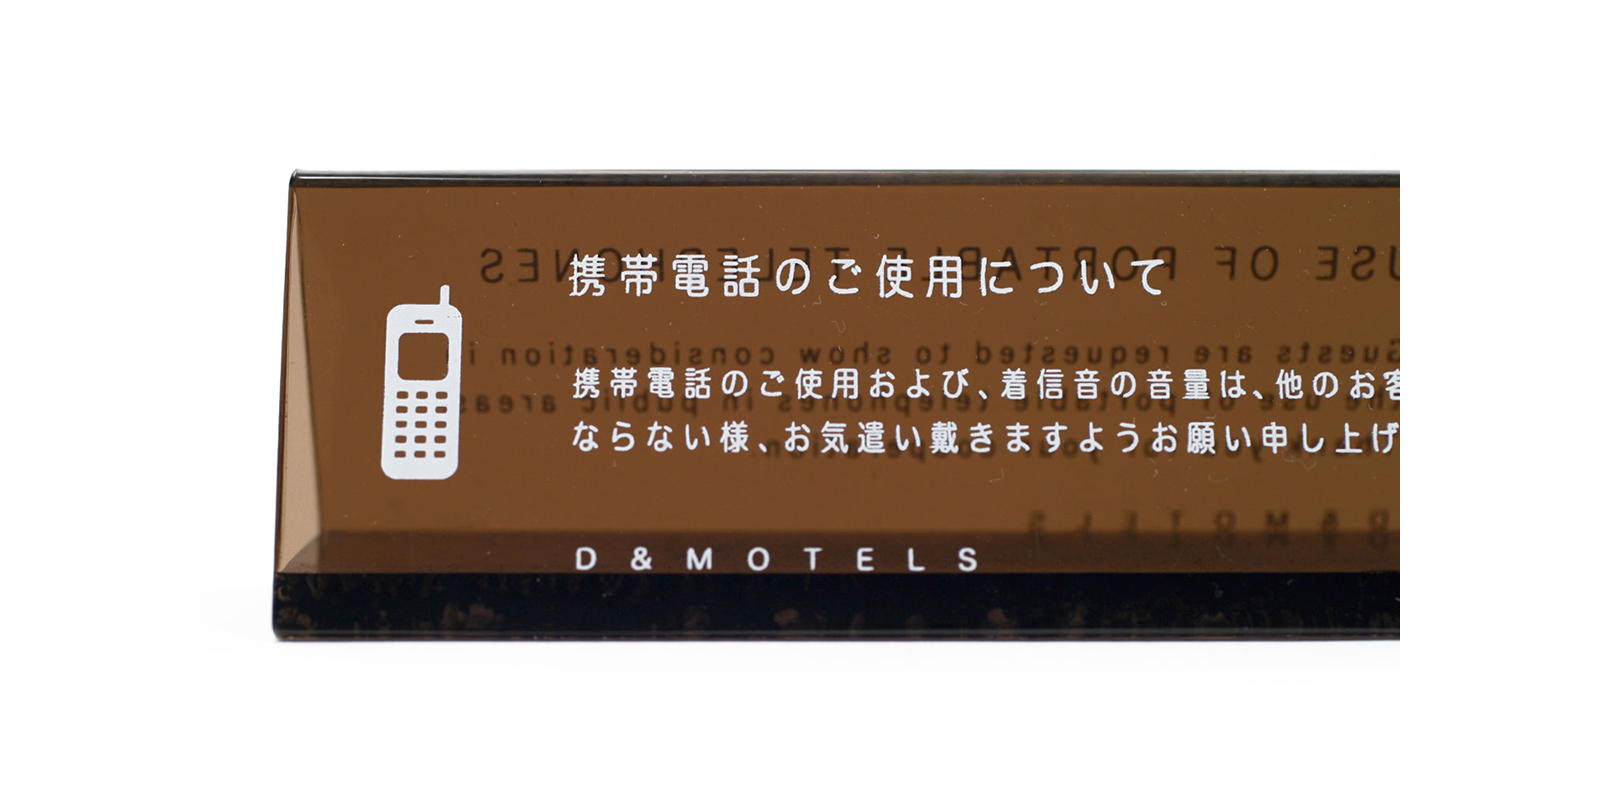 D&MOTELS携帯電話プレート